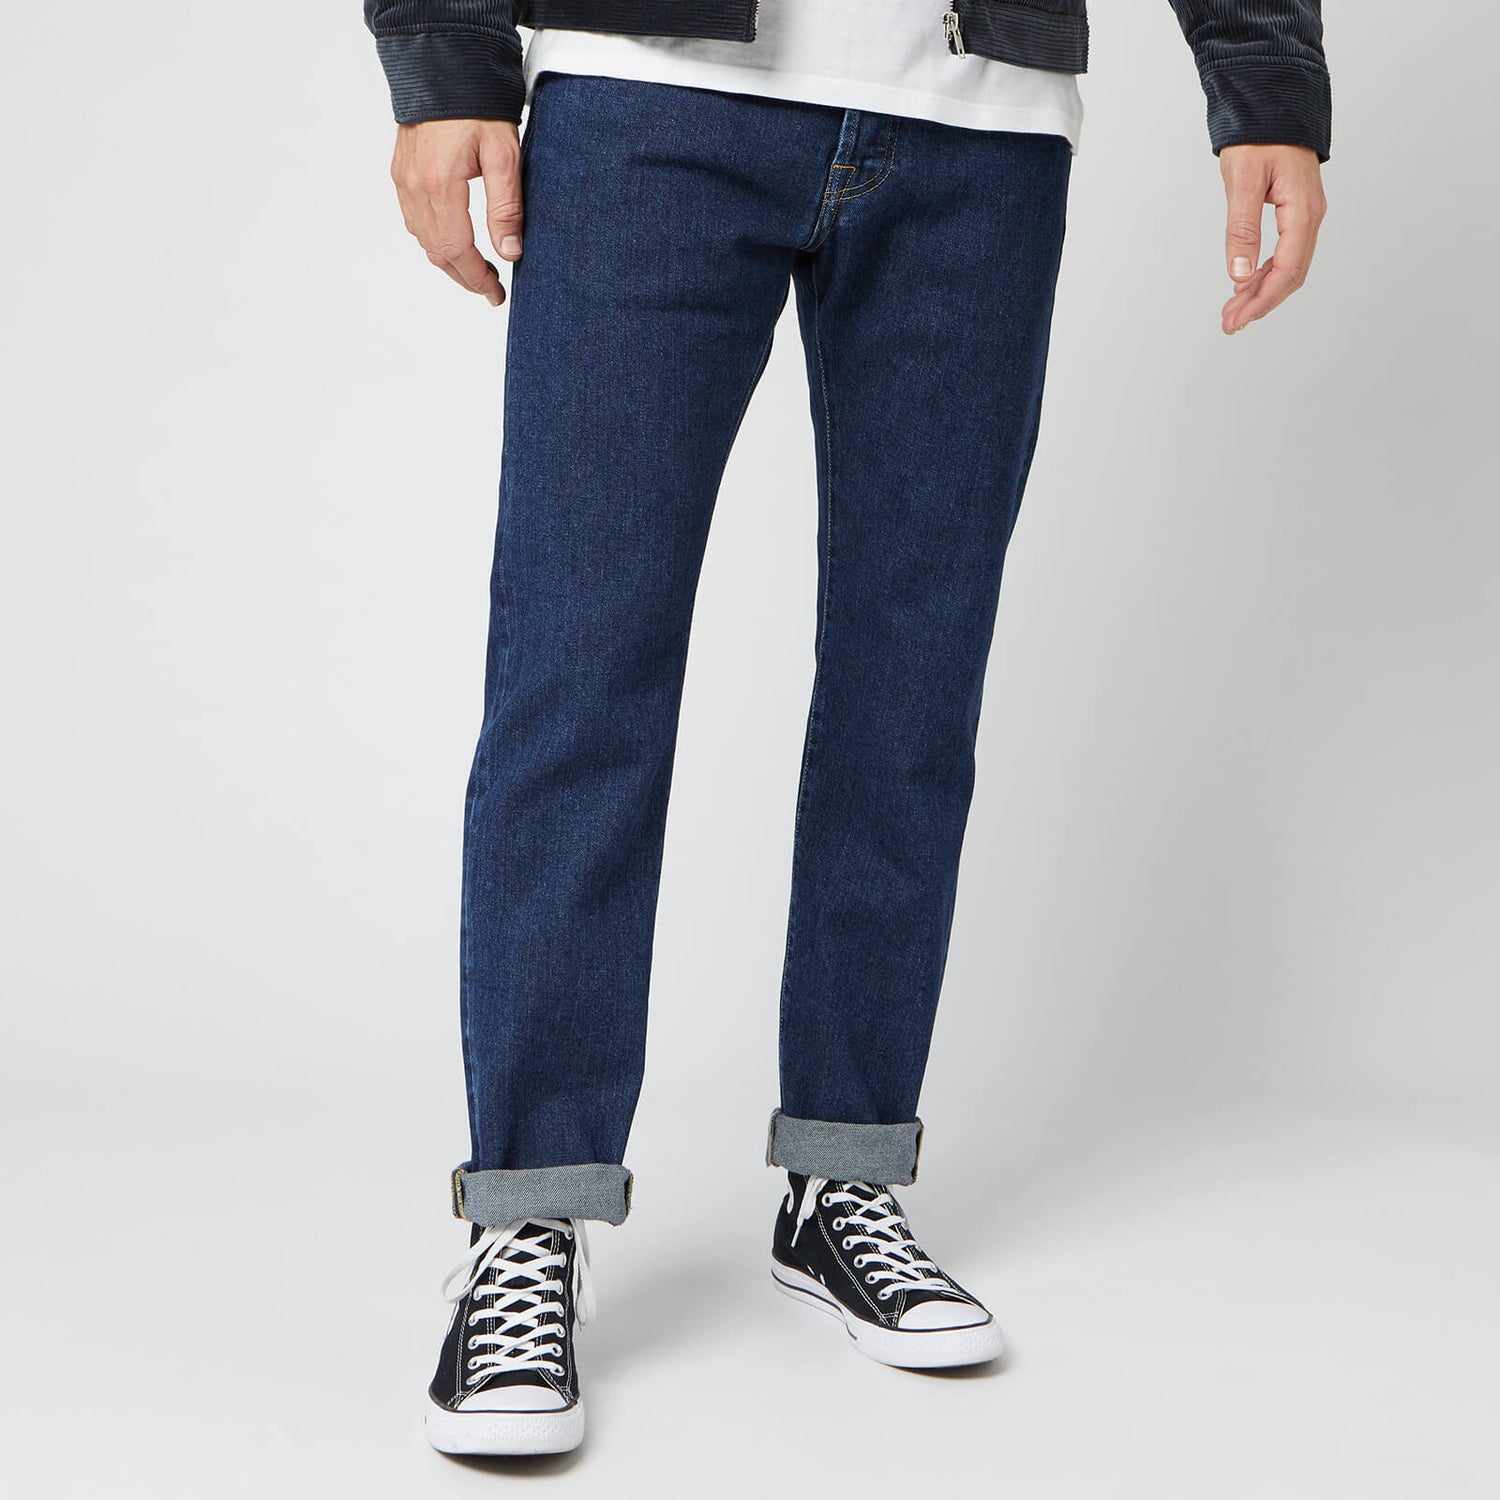 Edwin Denim Ed 55 Jeans Yoshiko Mens Clothing Jeans Straight-leg jeans Blue Wash for Men 